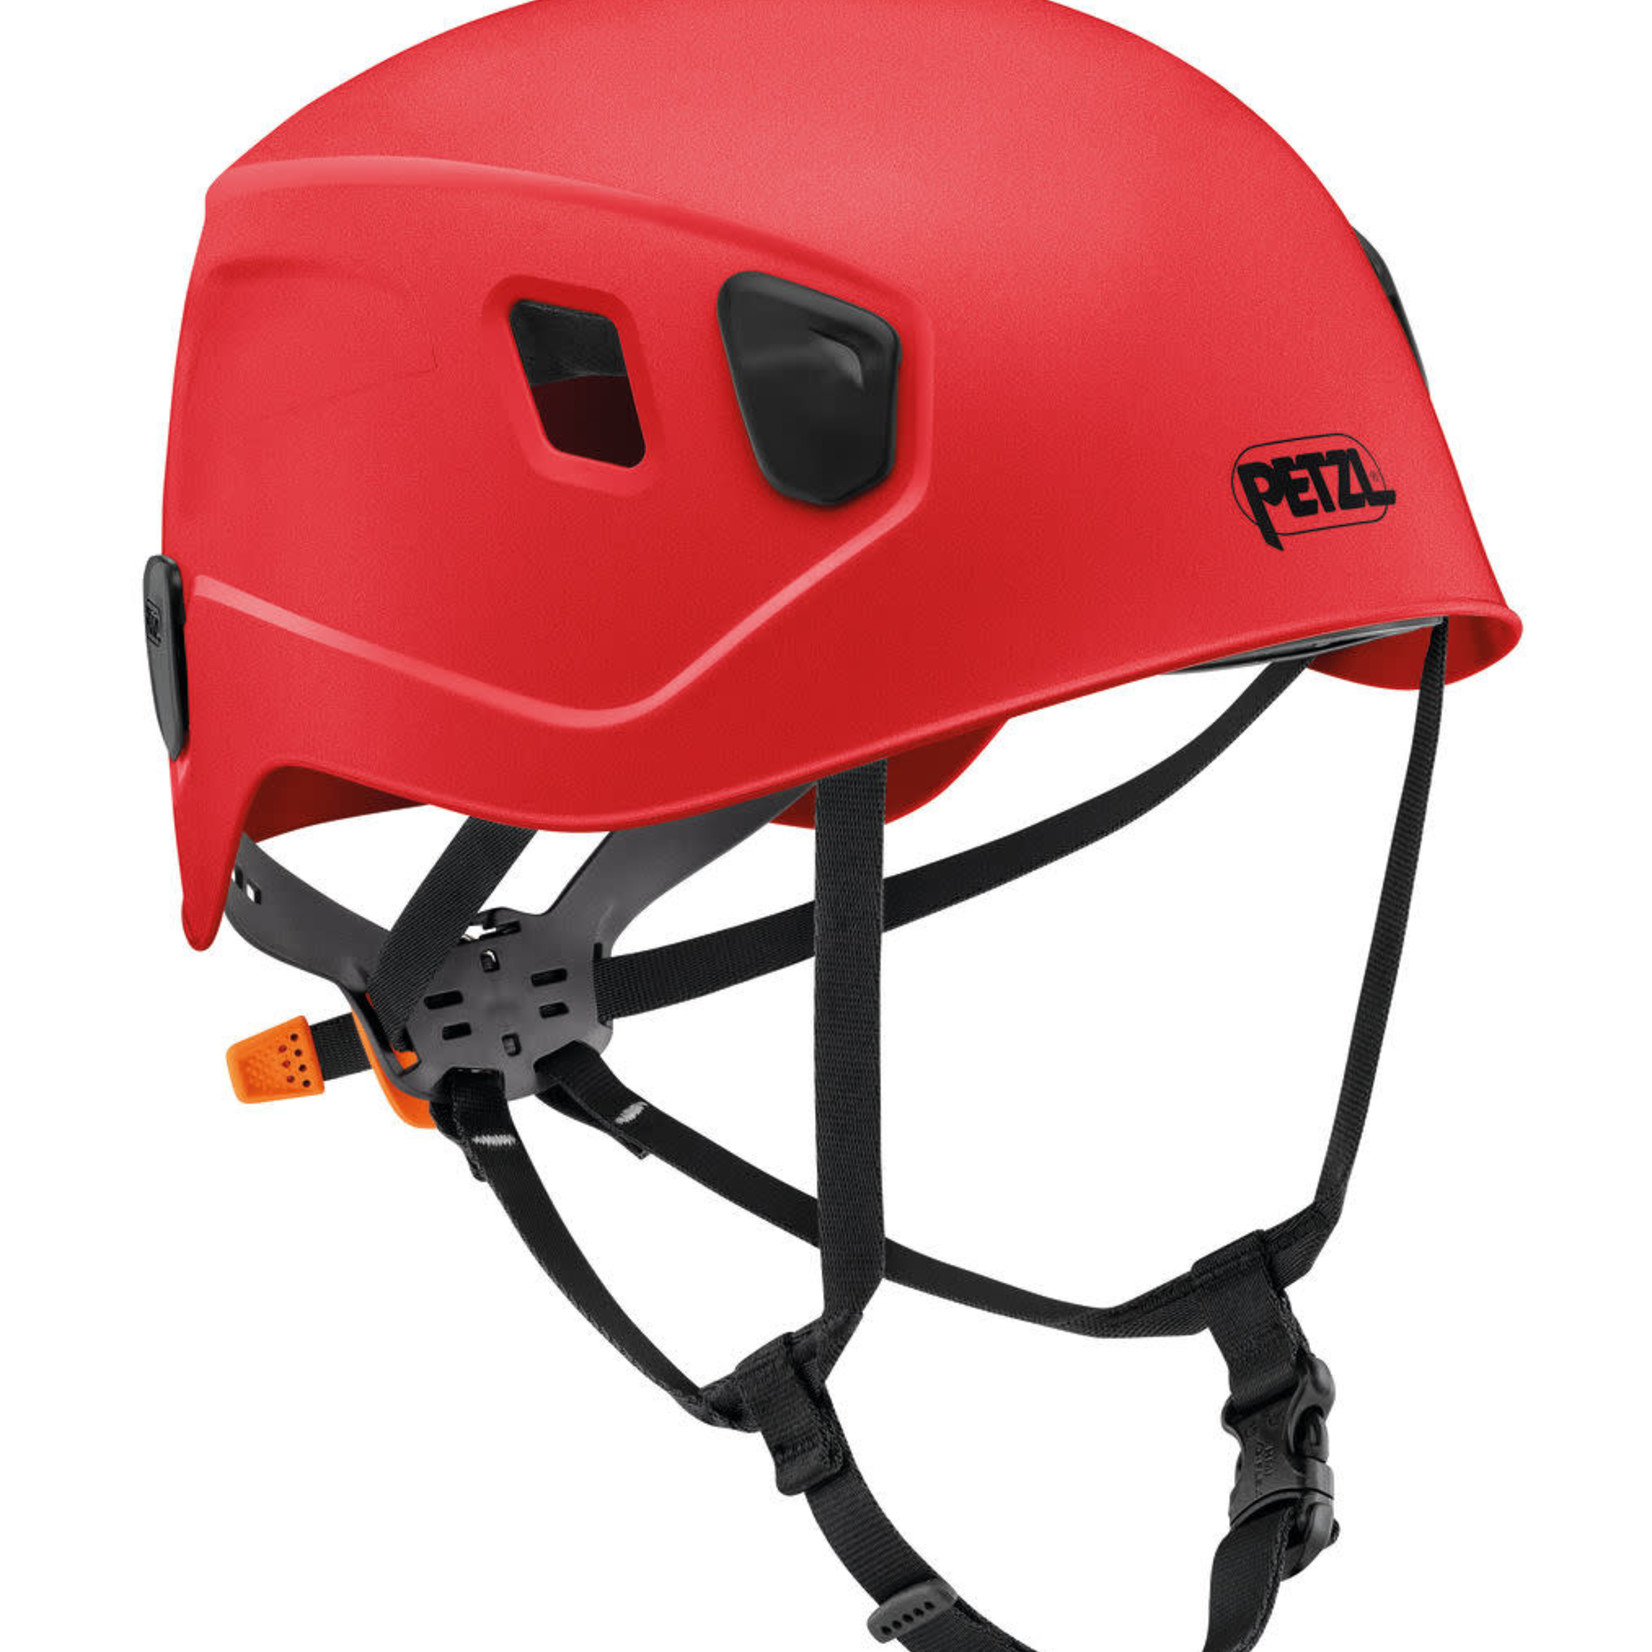 Petzl Panga Helmets (Contact us regarding discounts for activity providers & centres)